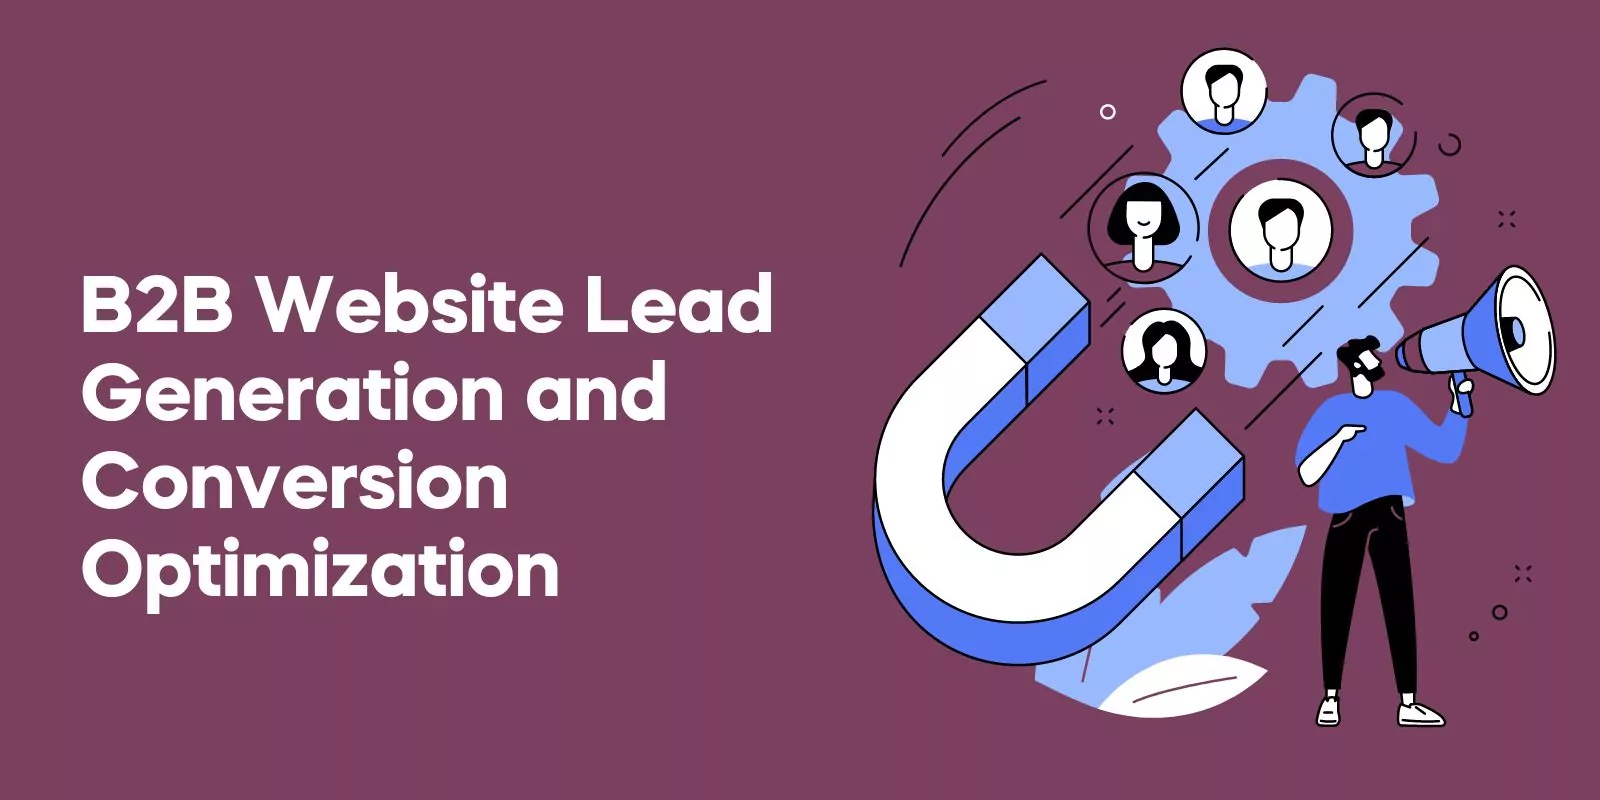 B2B Website Lead Generation and Conversion Optimization